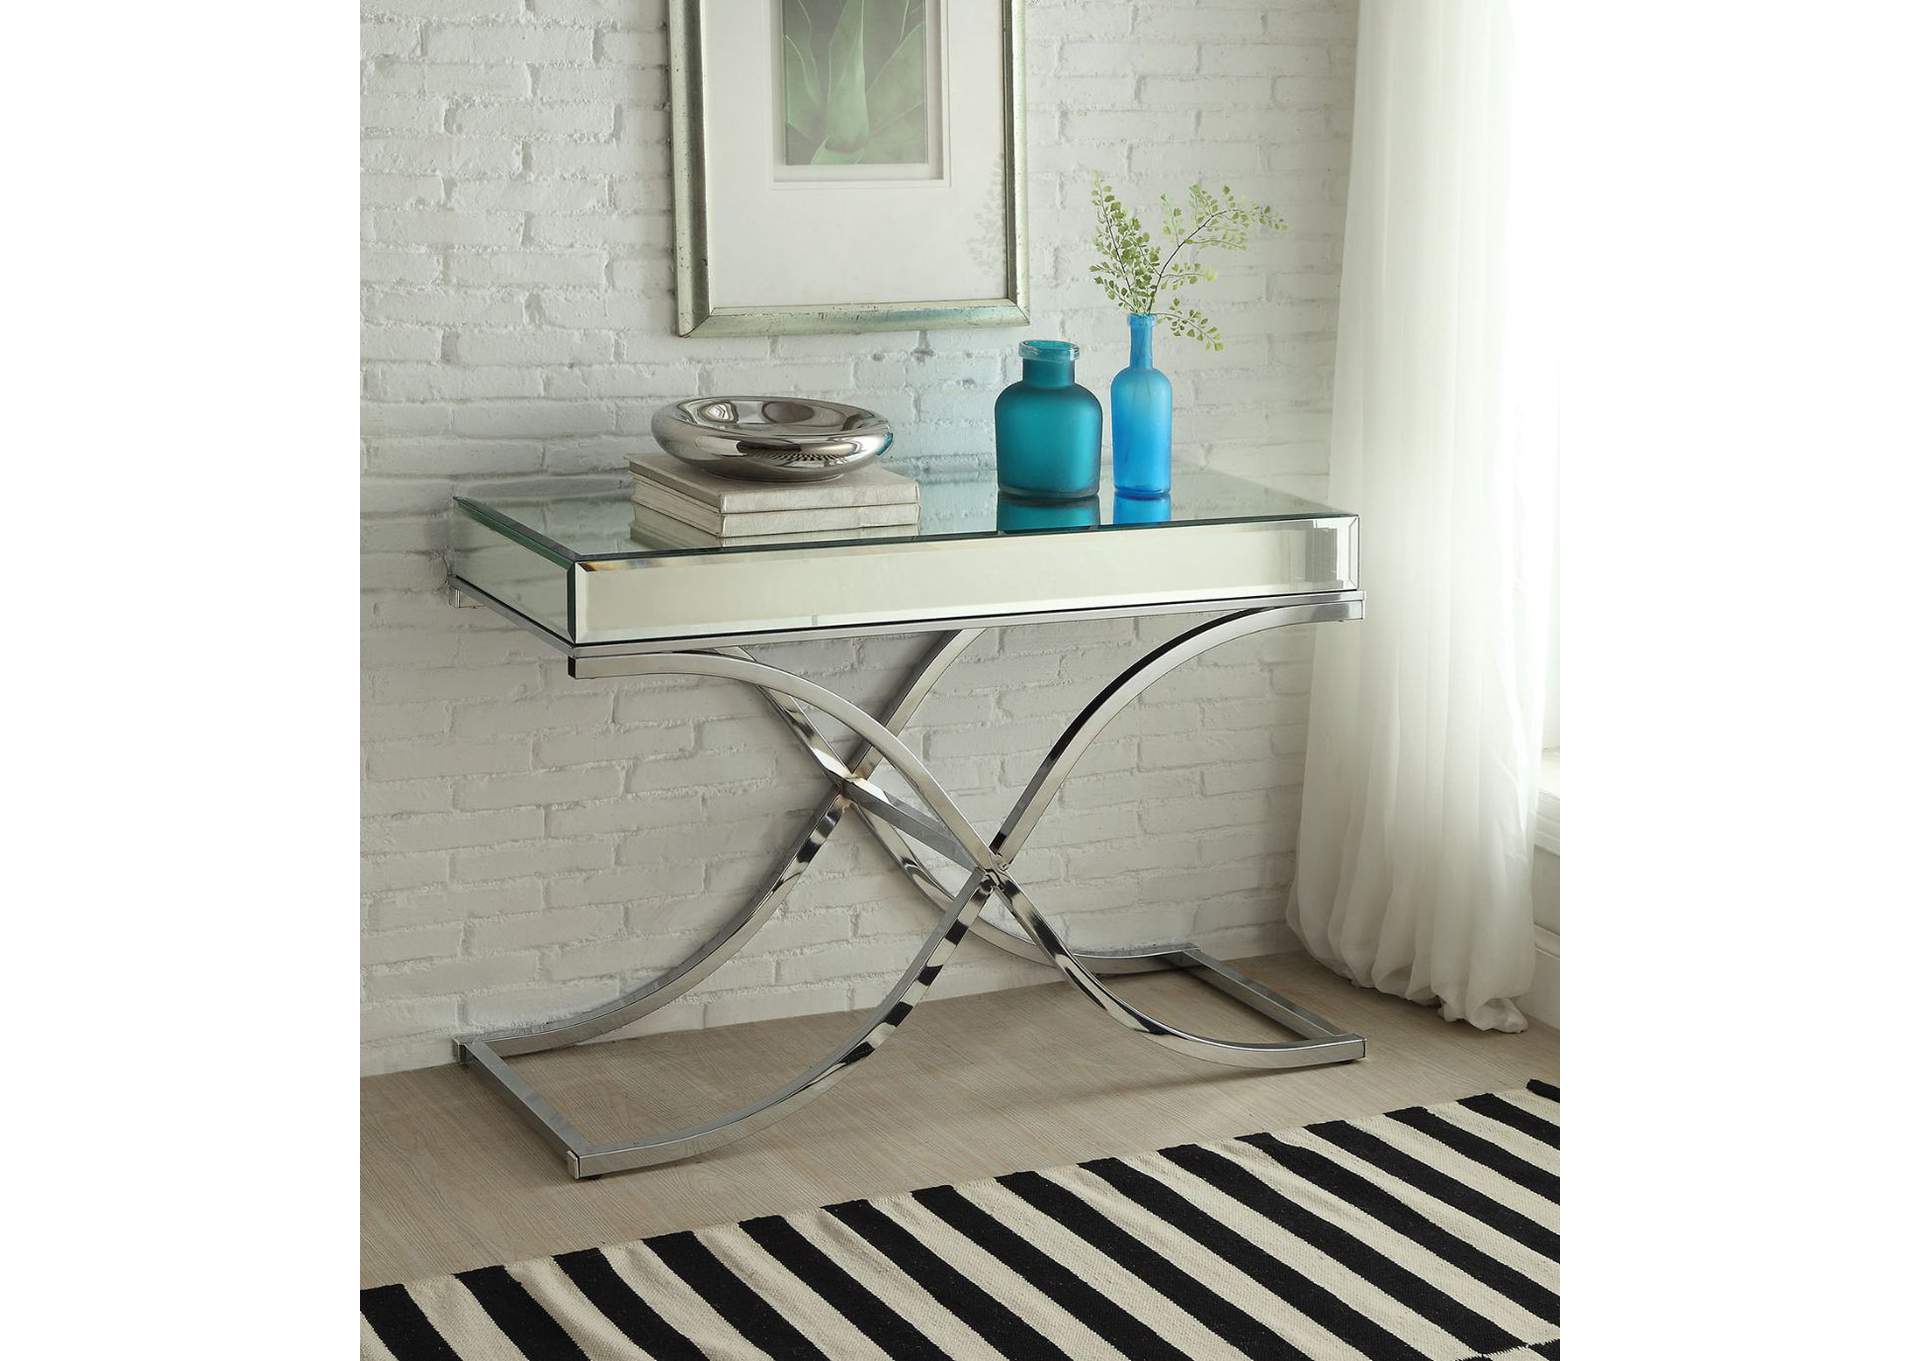 Furniture To Go Brooklyn Ny Yuri Mirrored Top Chrome Sofa Table